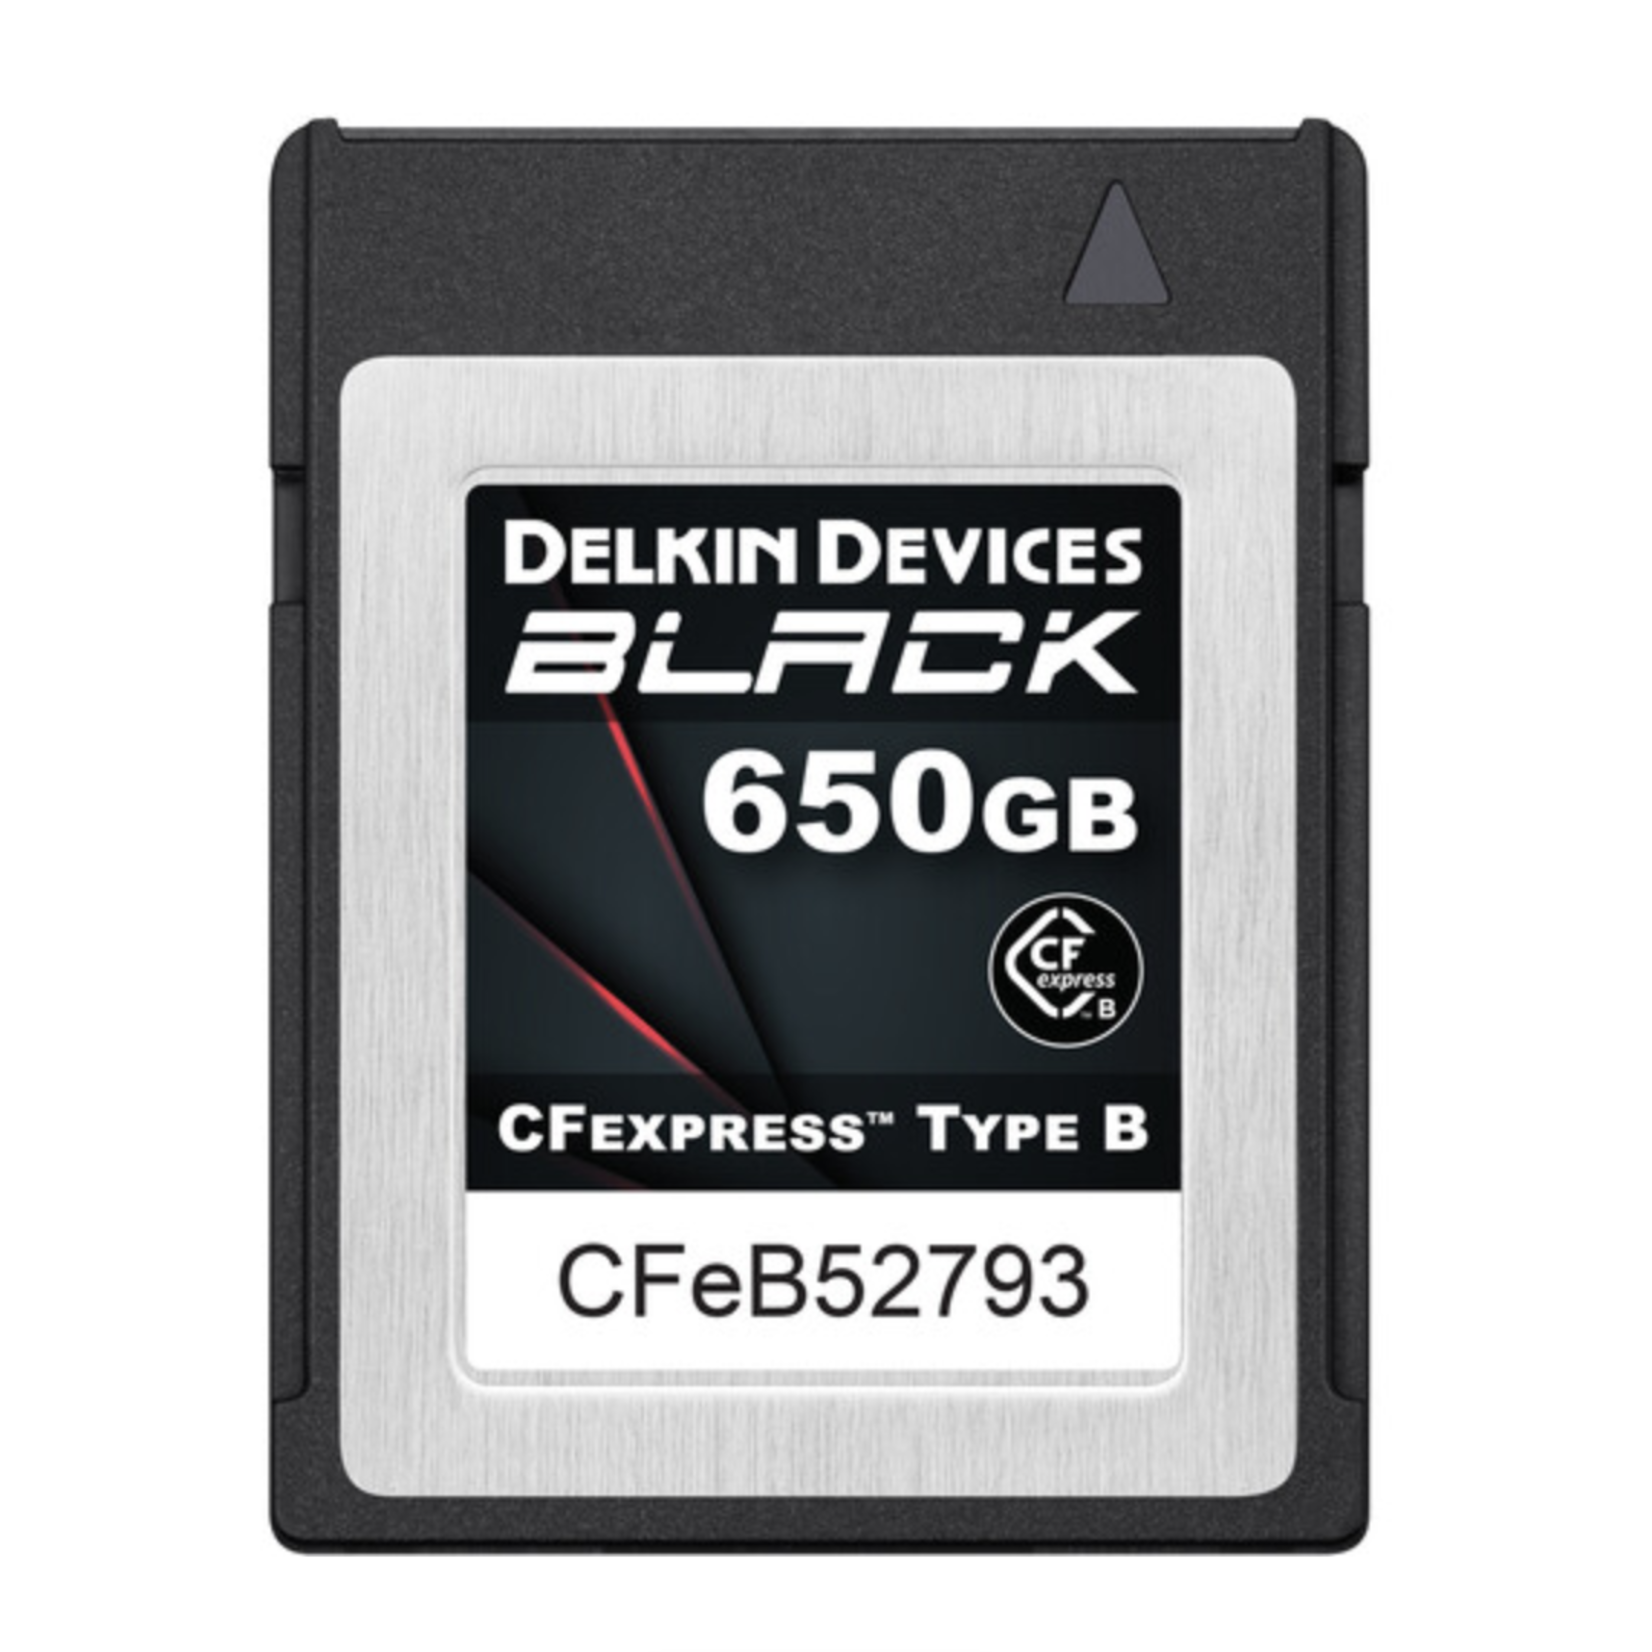 Delkin Delkin Devices 650GB BLACK CFexpress Type B Memory Card